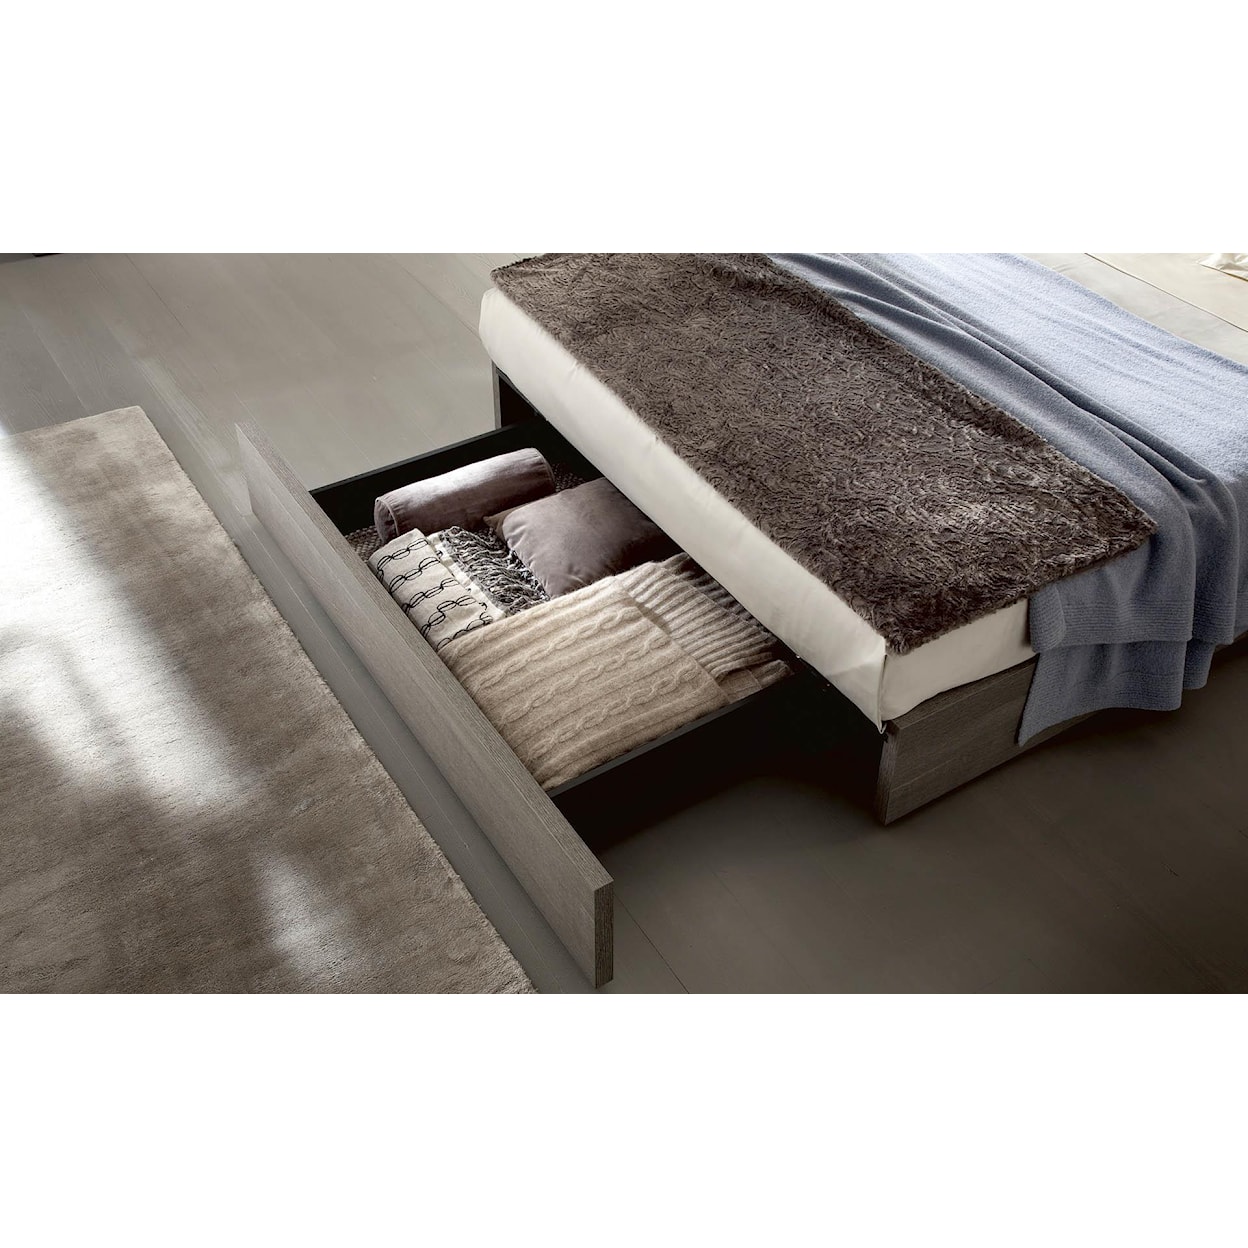 Alf Italia Tivoli Queen Bed with Storage Drawer